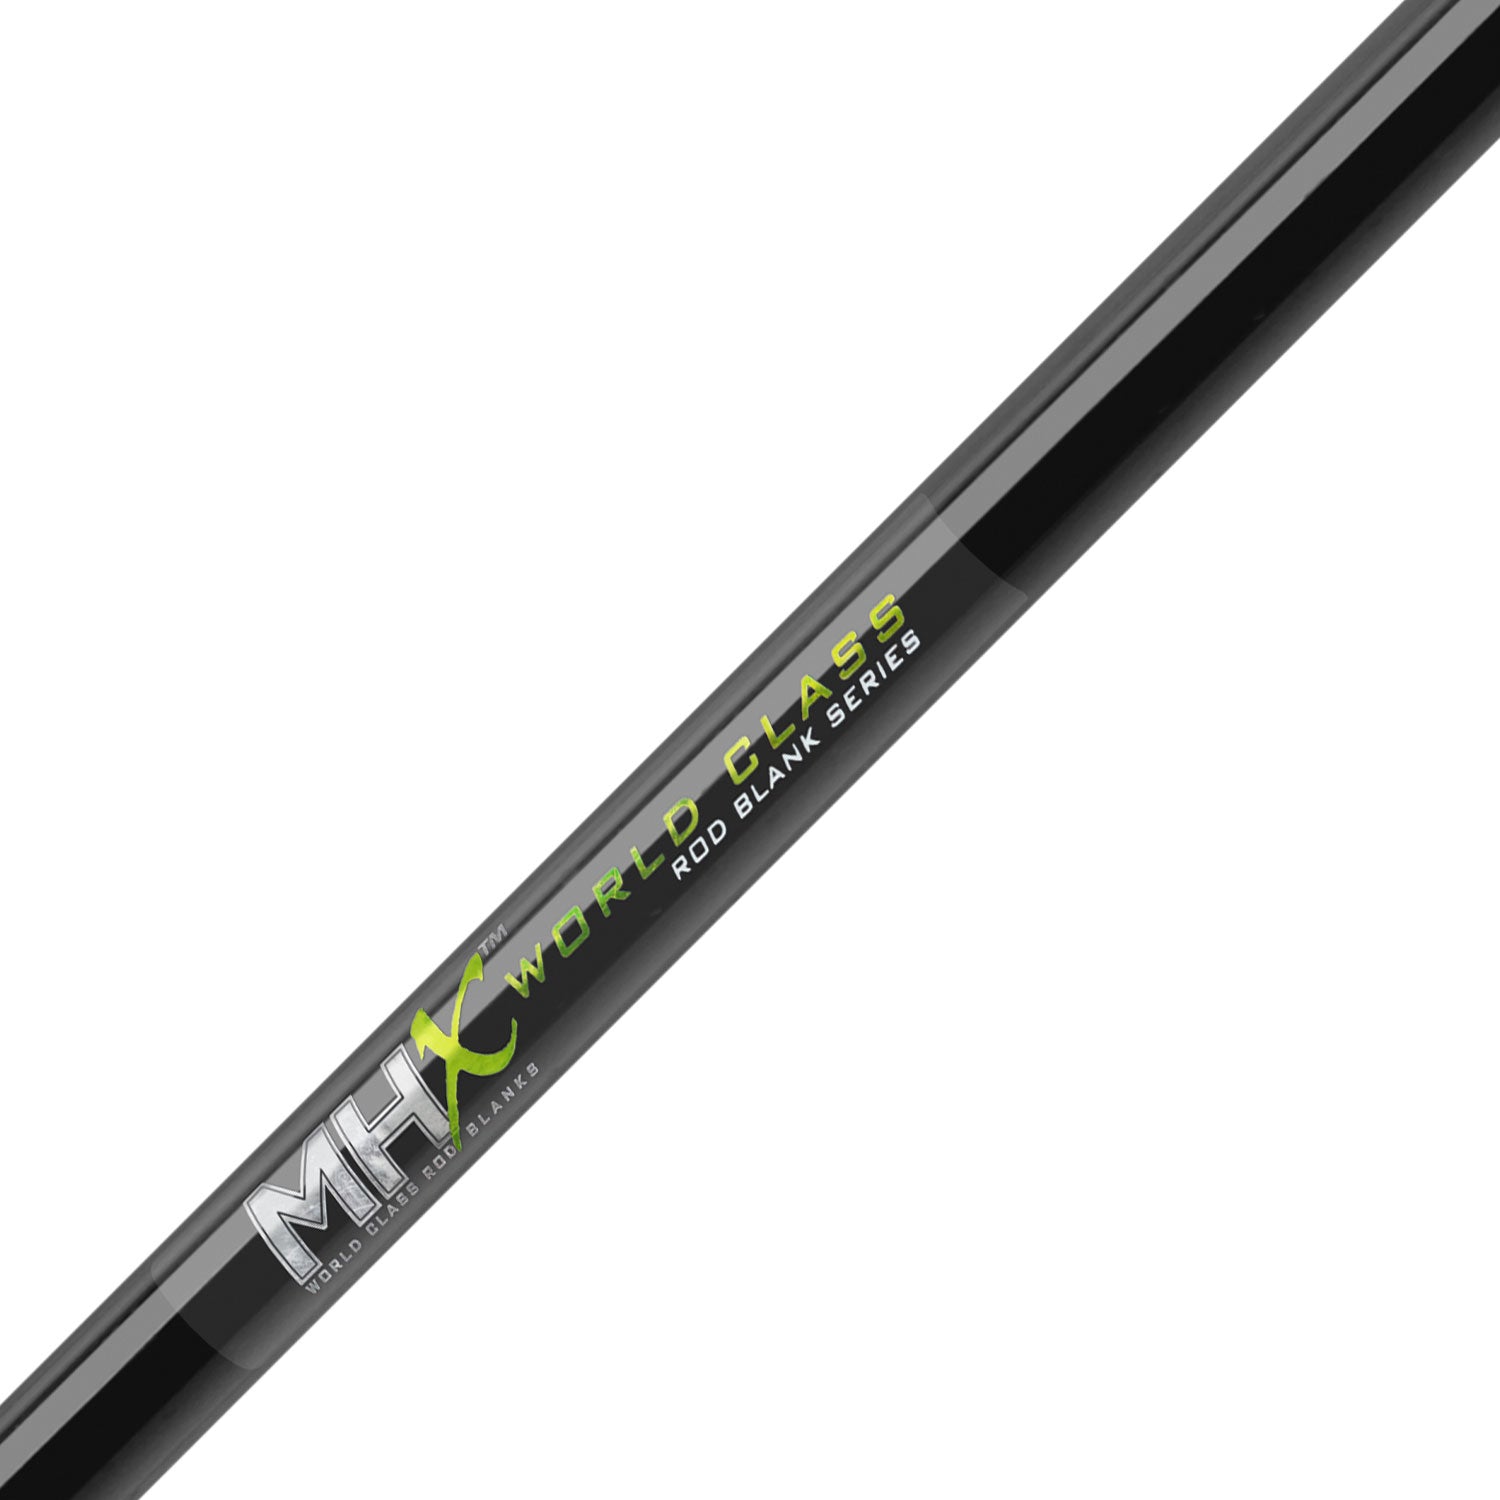 MHX 9'0 X-Heavy Fast Action Musky & Saltwater Rod Blank - MU108XHF-MH